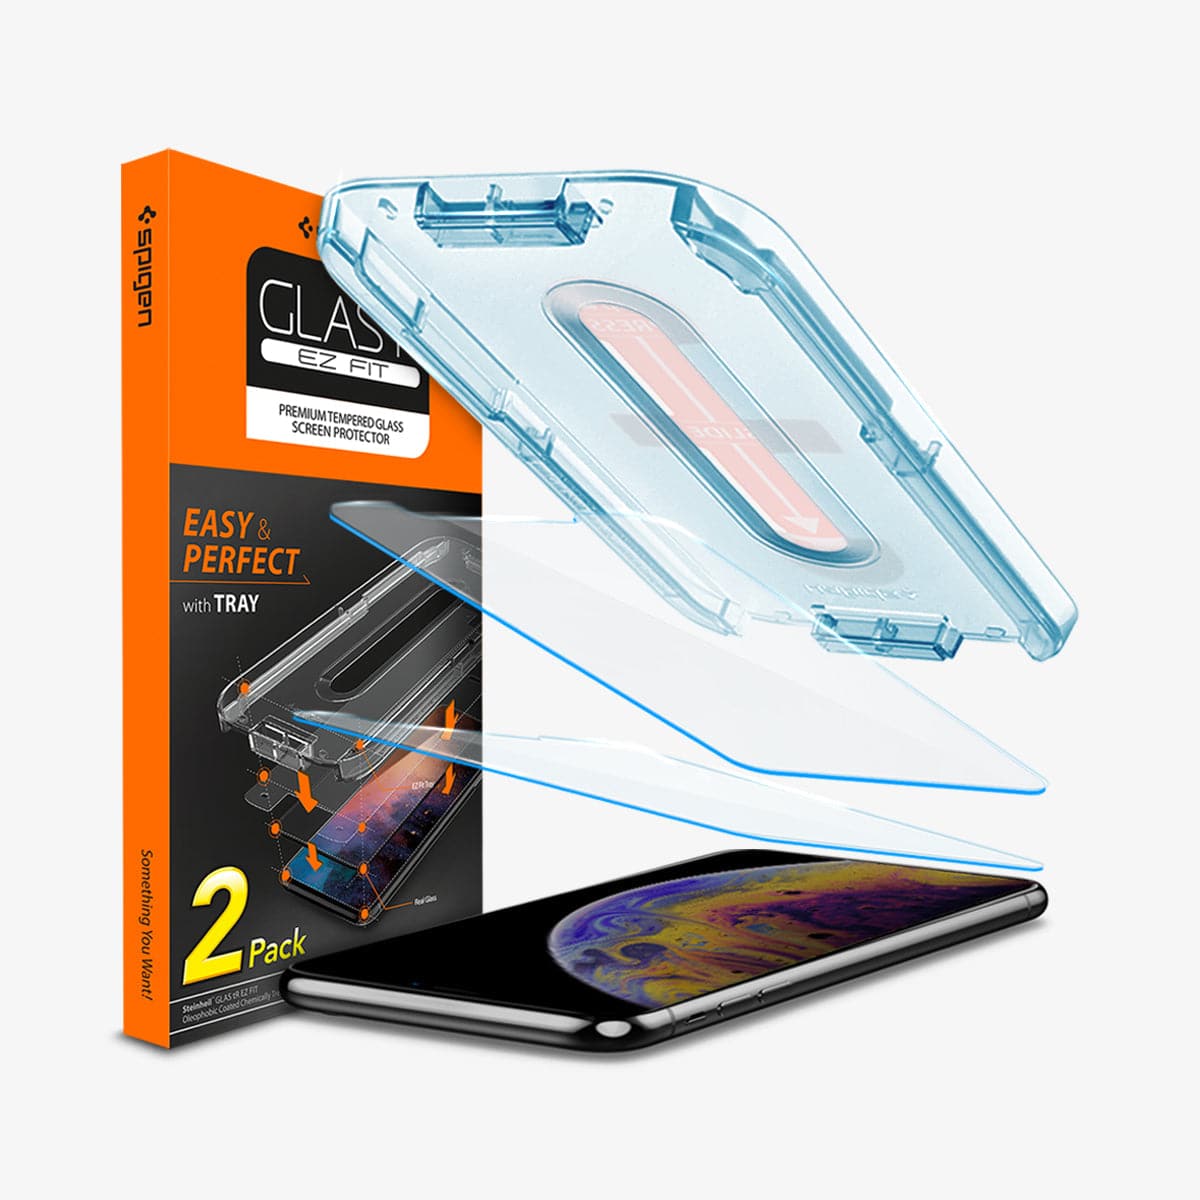 Spigen GLAS.tR EZ Fit  Sensor Protected Tempered Glass iPhone 15 Plus